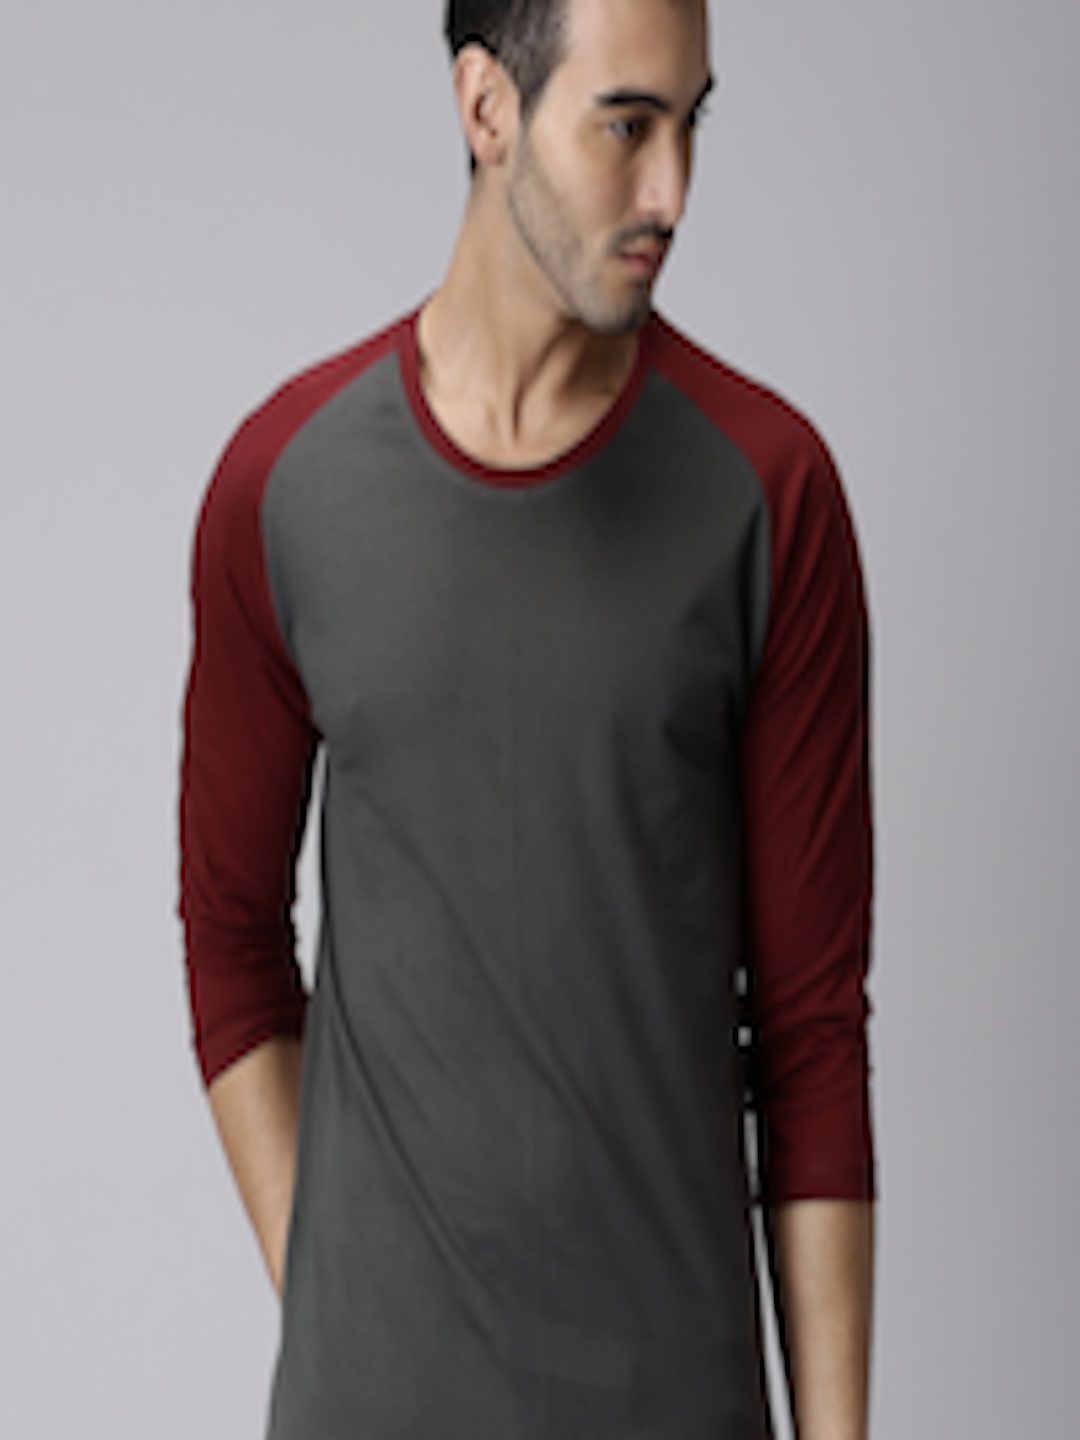 Buy Moda Rapido Back To Basics Charcoal Maroon Raglan Tshirt - Tshirts ...